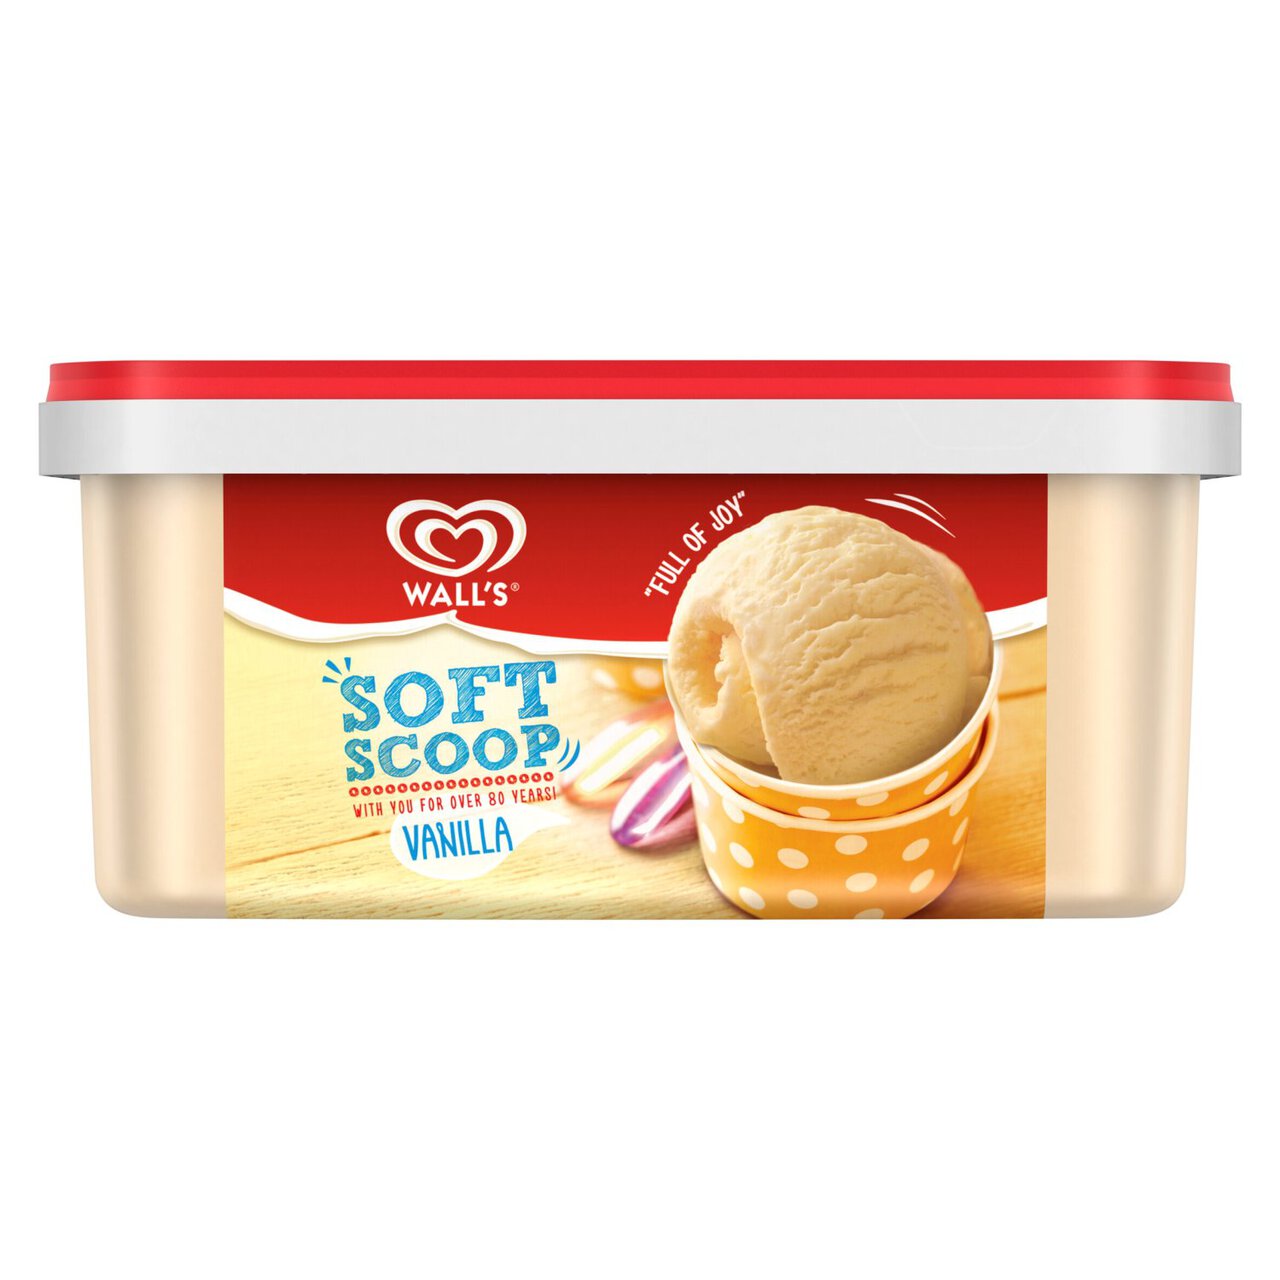 Wall's Soft Scoop Vanilla Ice Cream Tub Dessert 1.8l